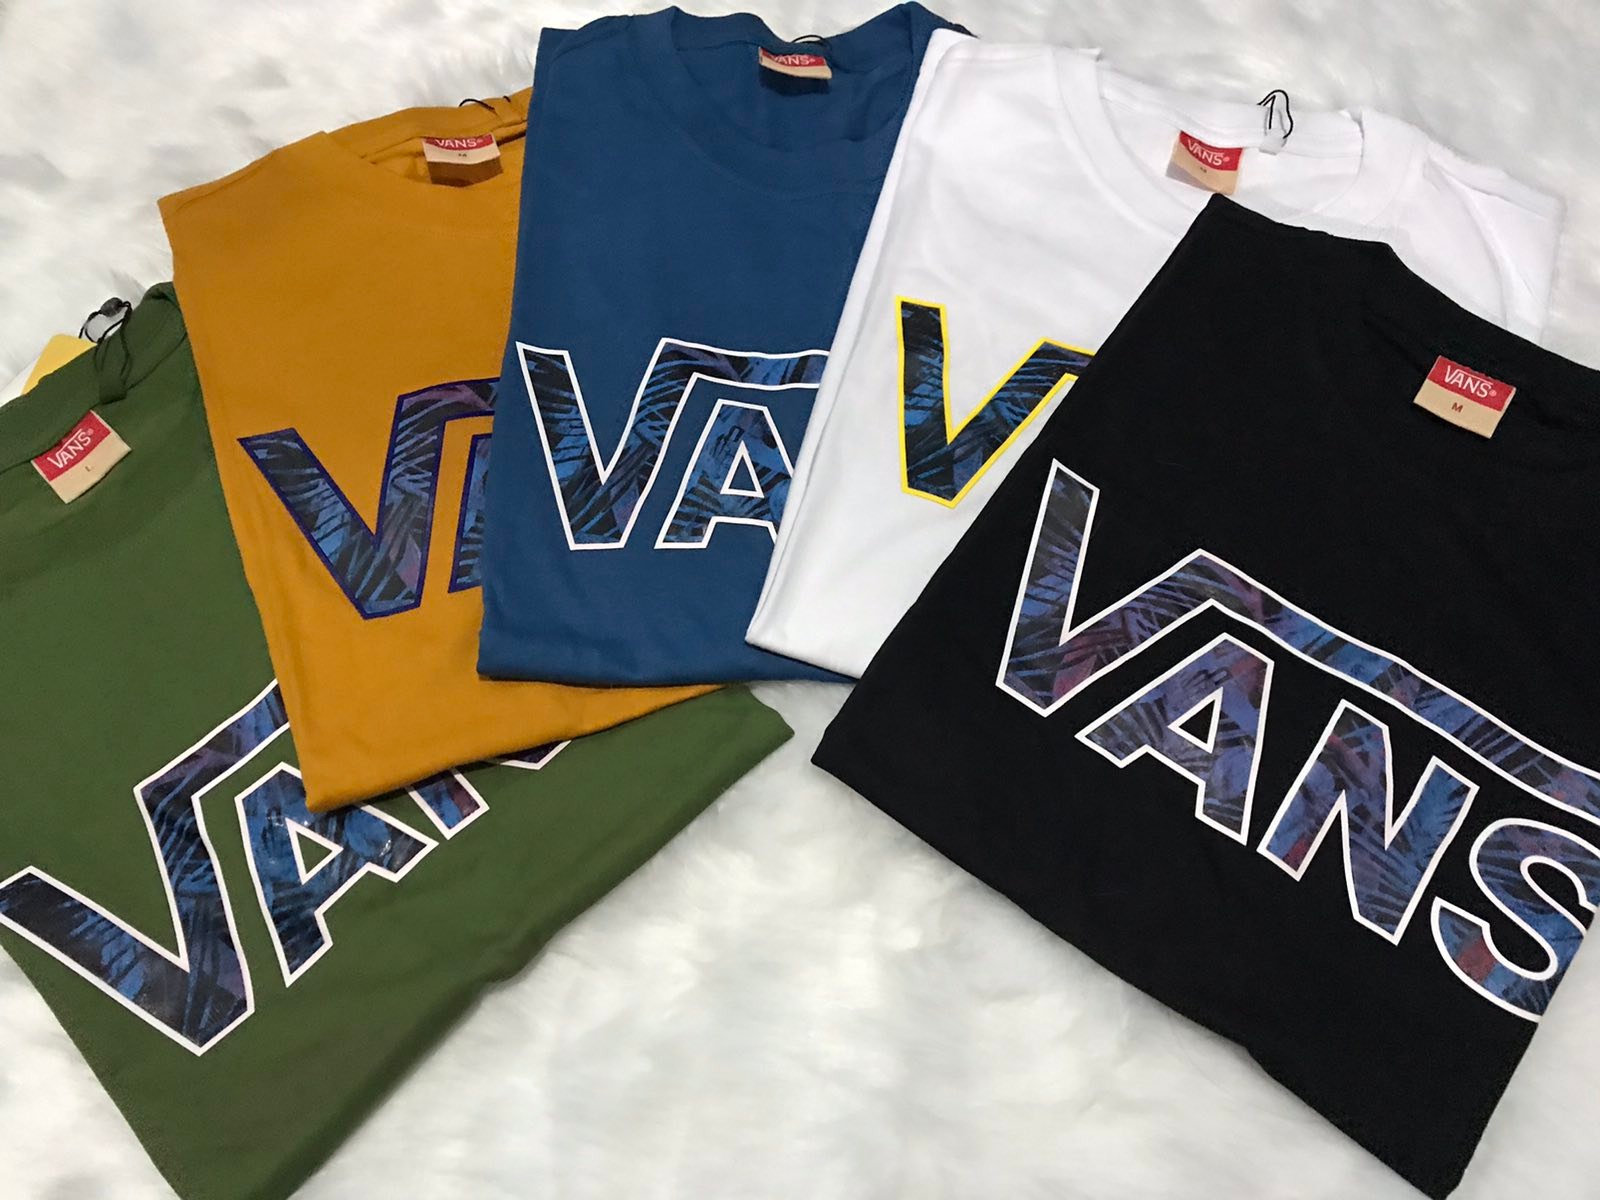 vans t shirt for sale philippines